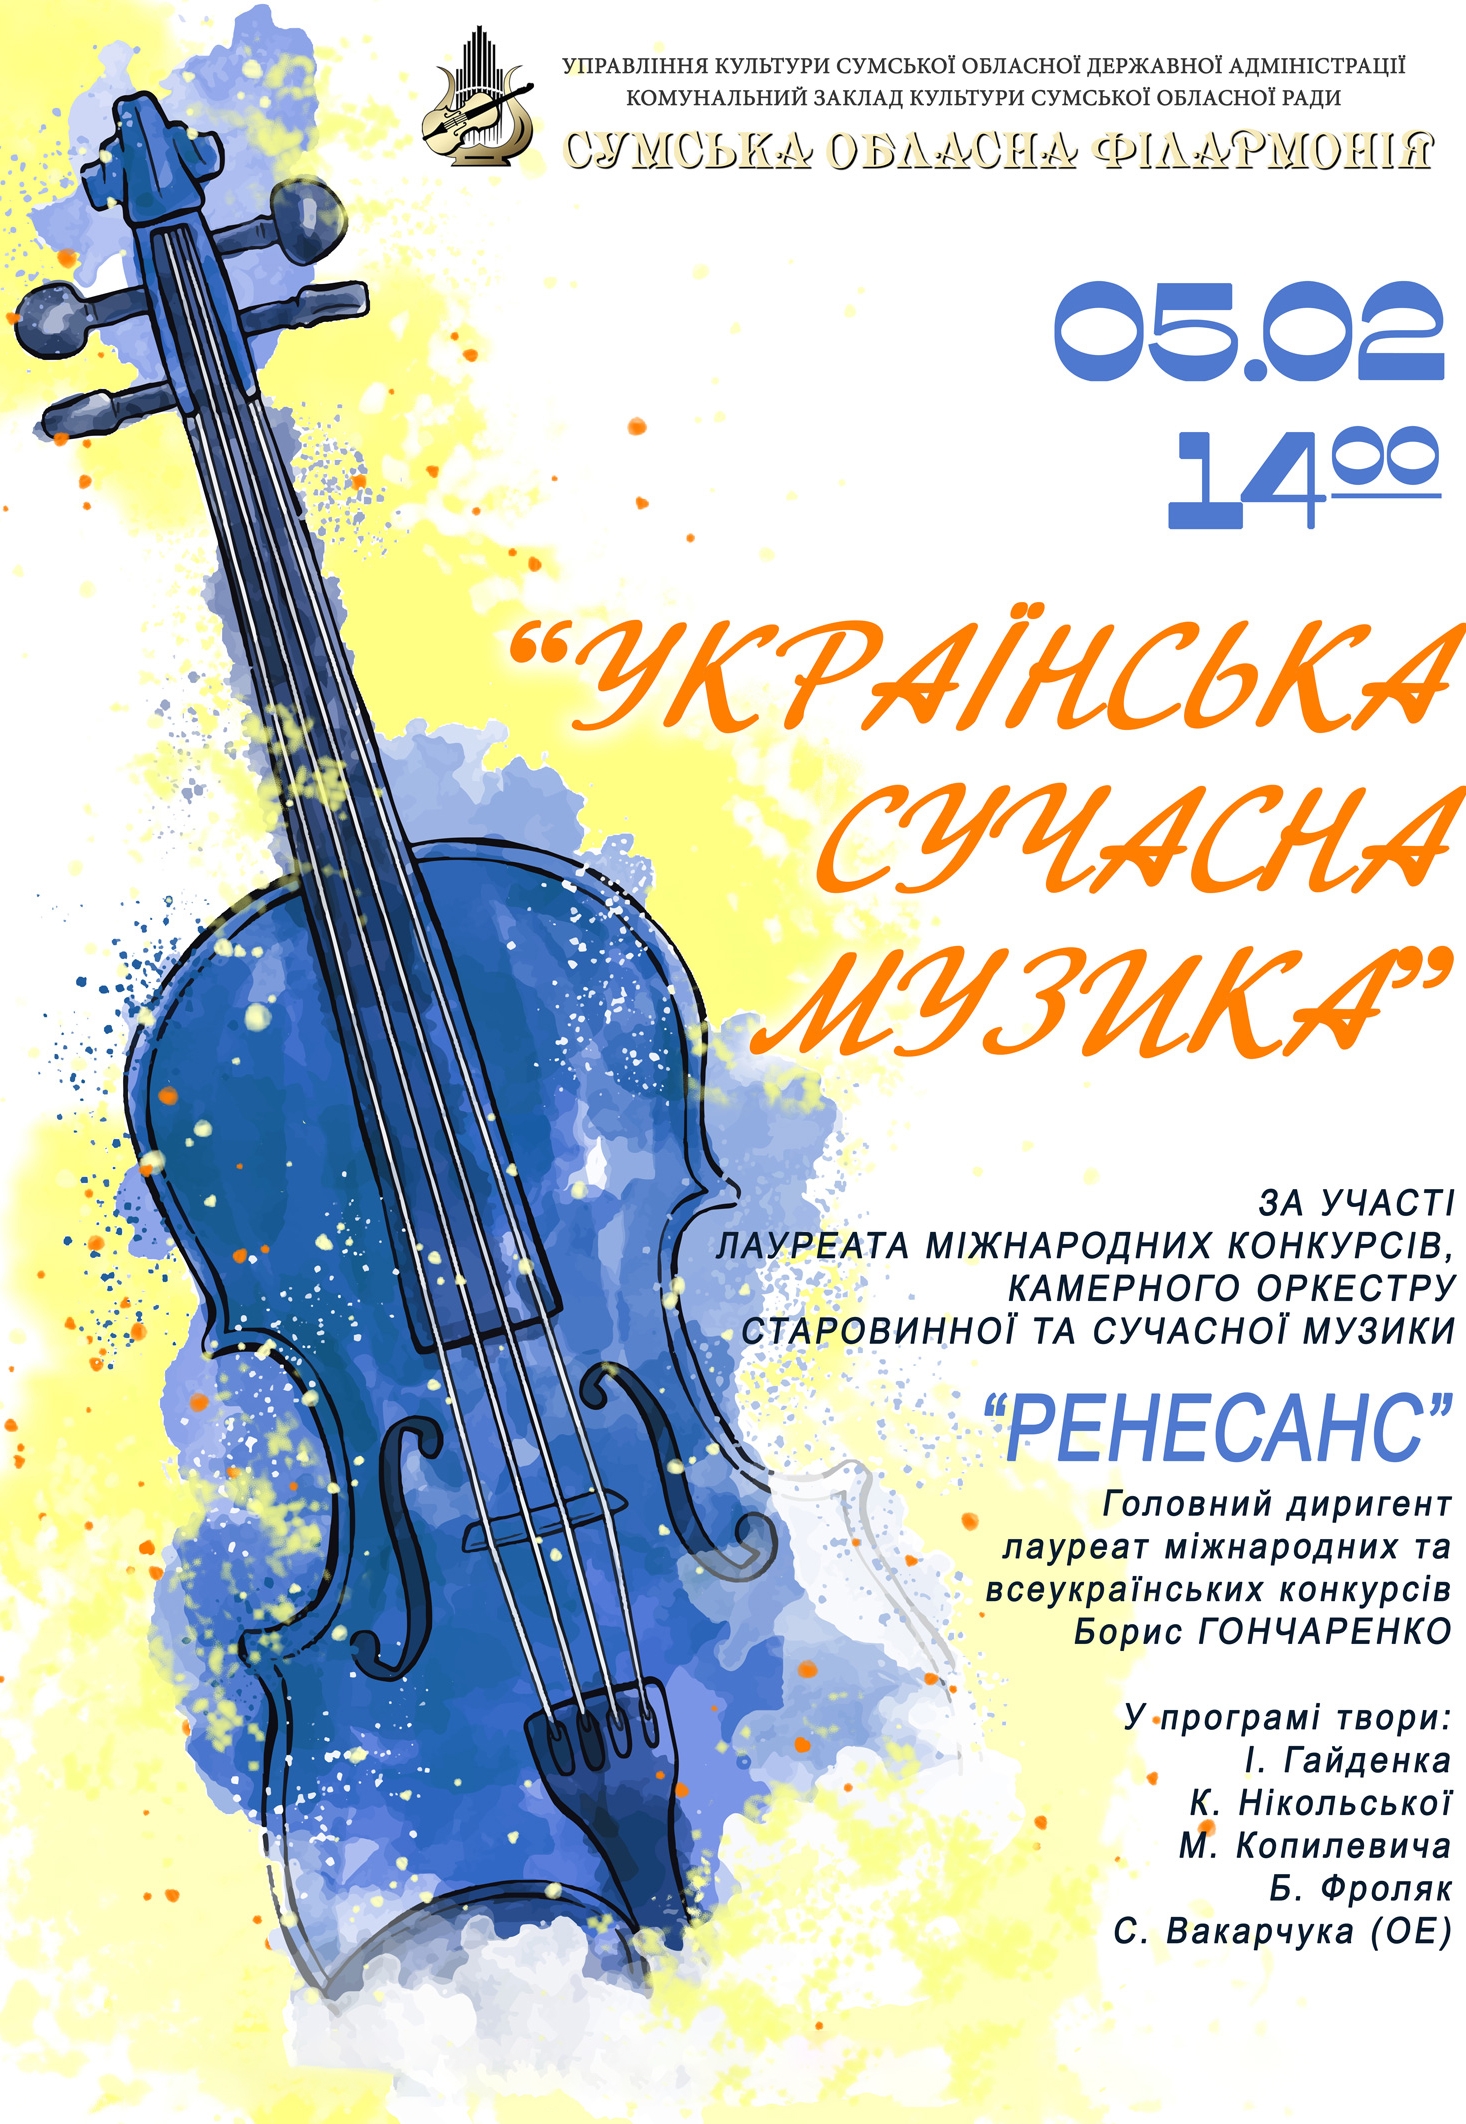 Концерт "Українська сучасна музика"